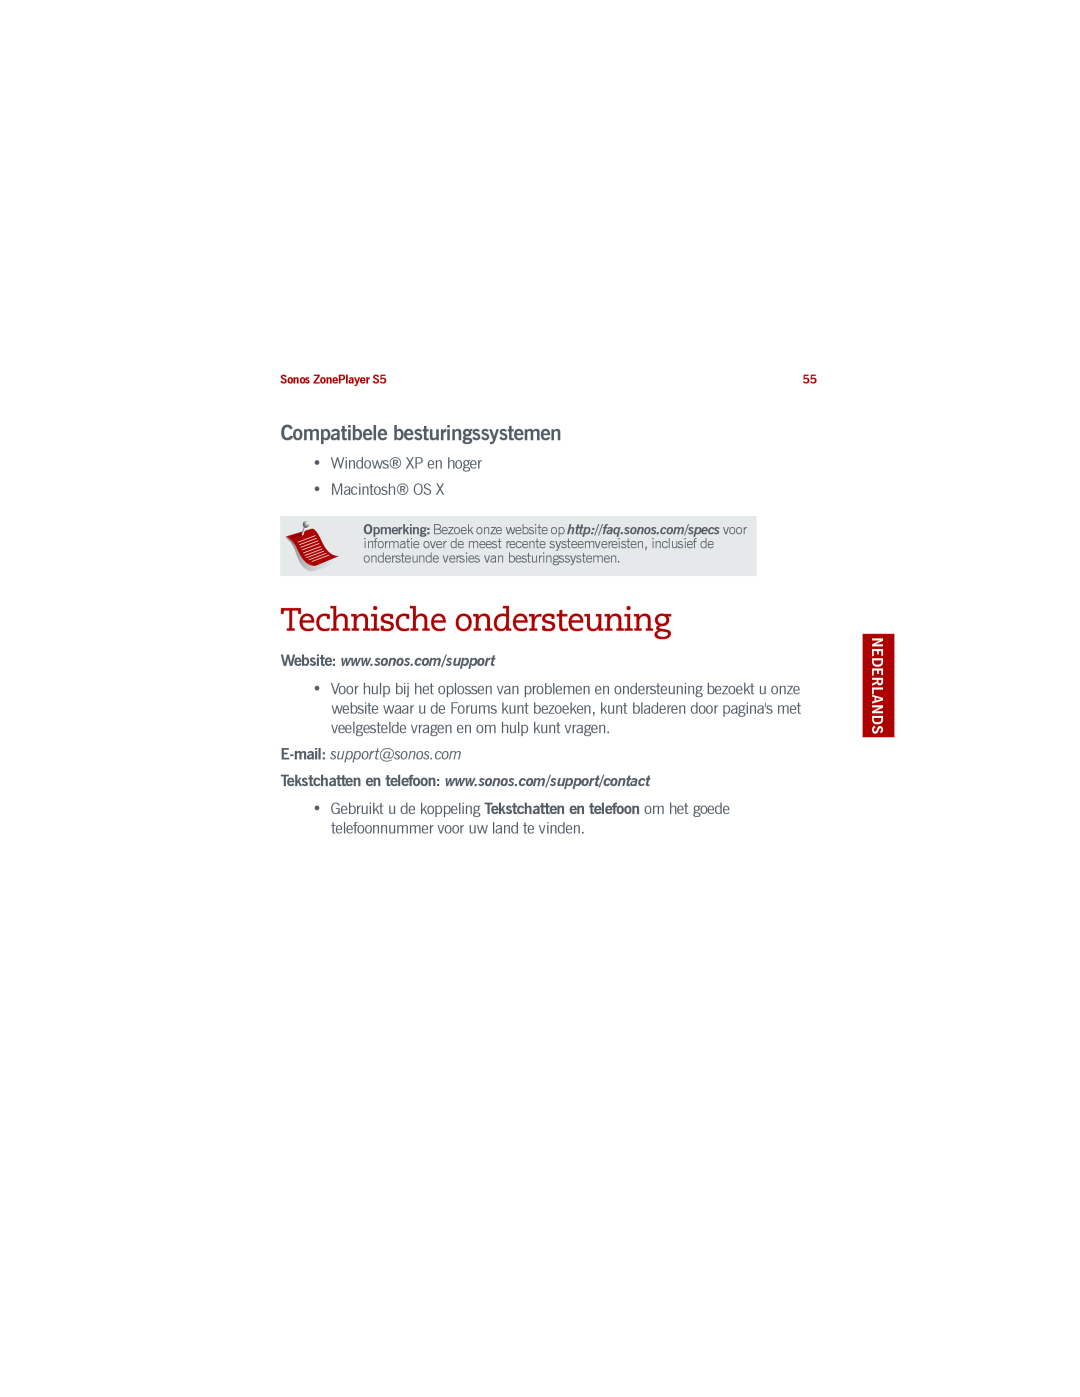 Sonos manual Technische ondersteuning, Nederlands Duits Nederlands Zweeds, Sonos ZonePlayer S5 